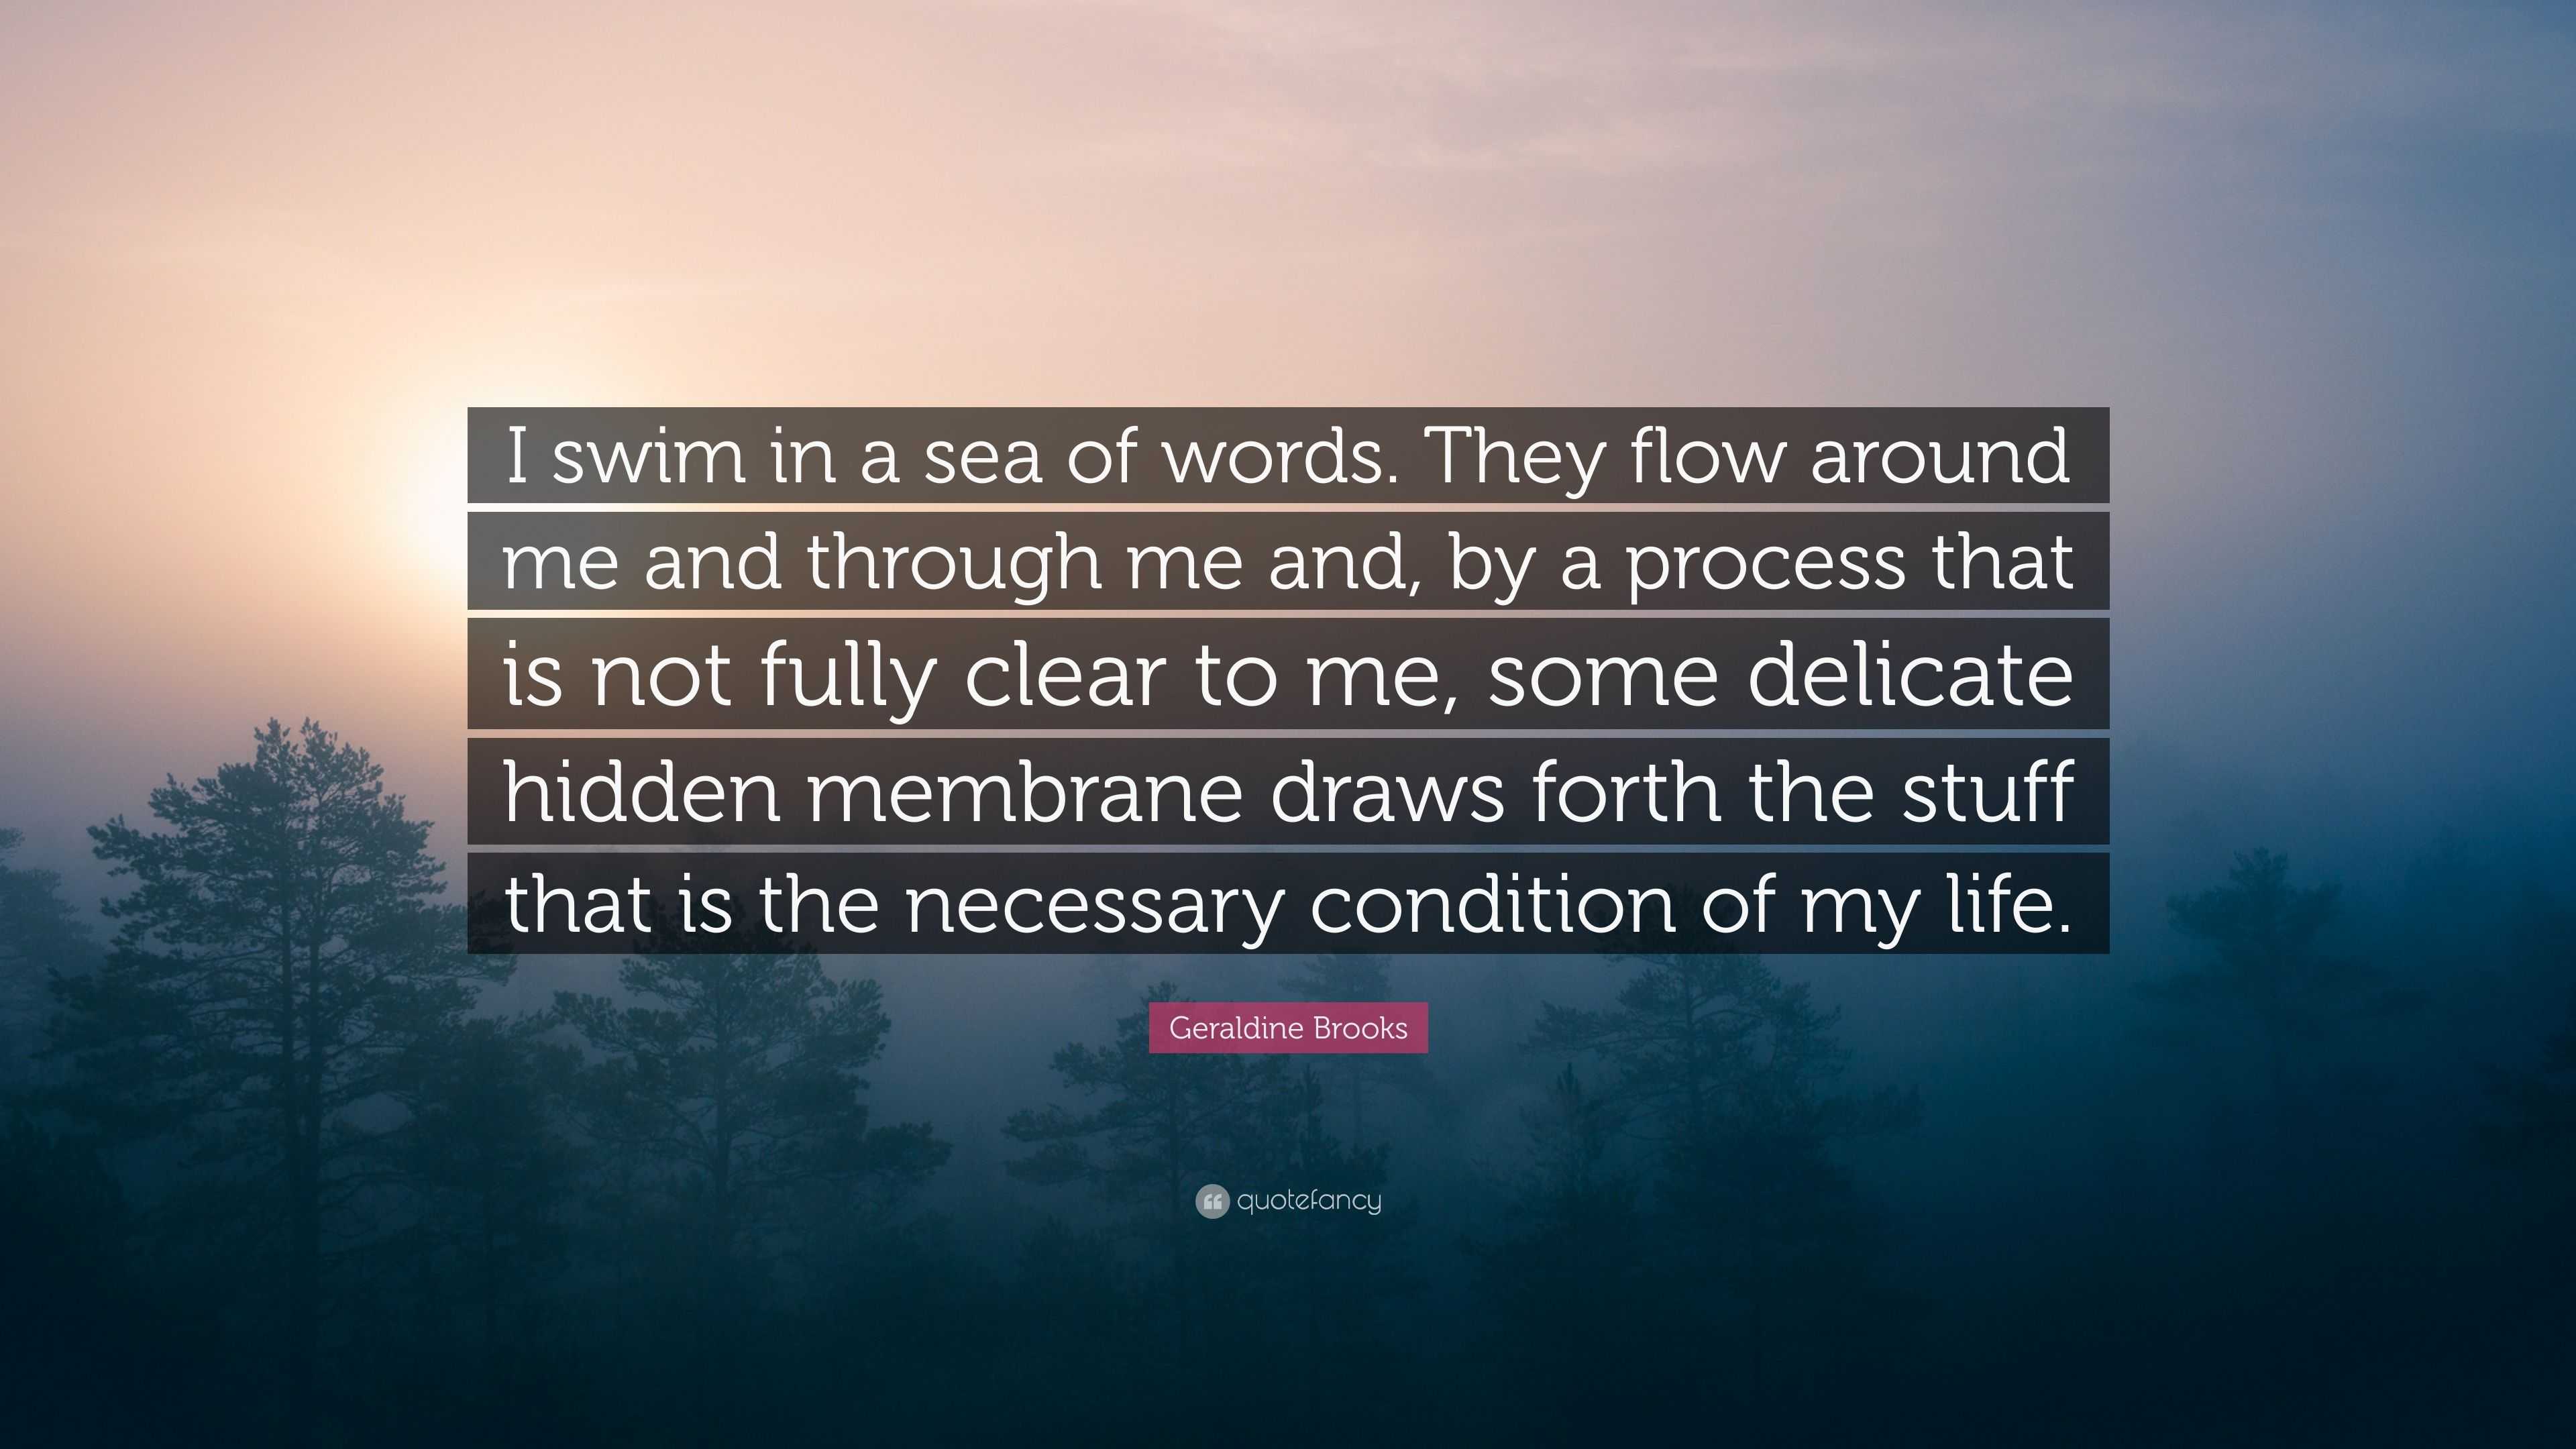 Geraldine Brooks Quote: “I swim in a sea of words. They flow around me ...